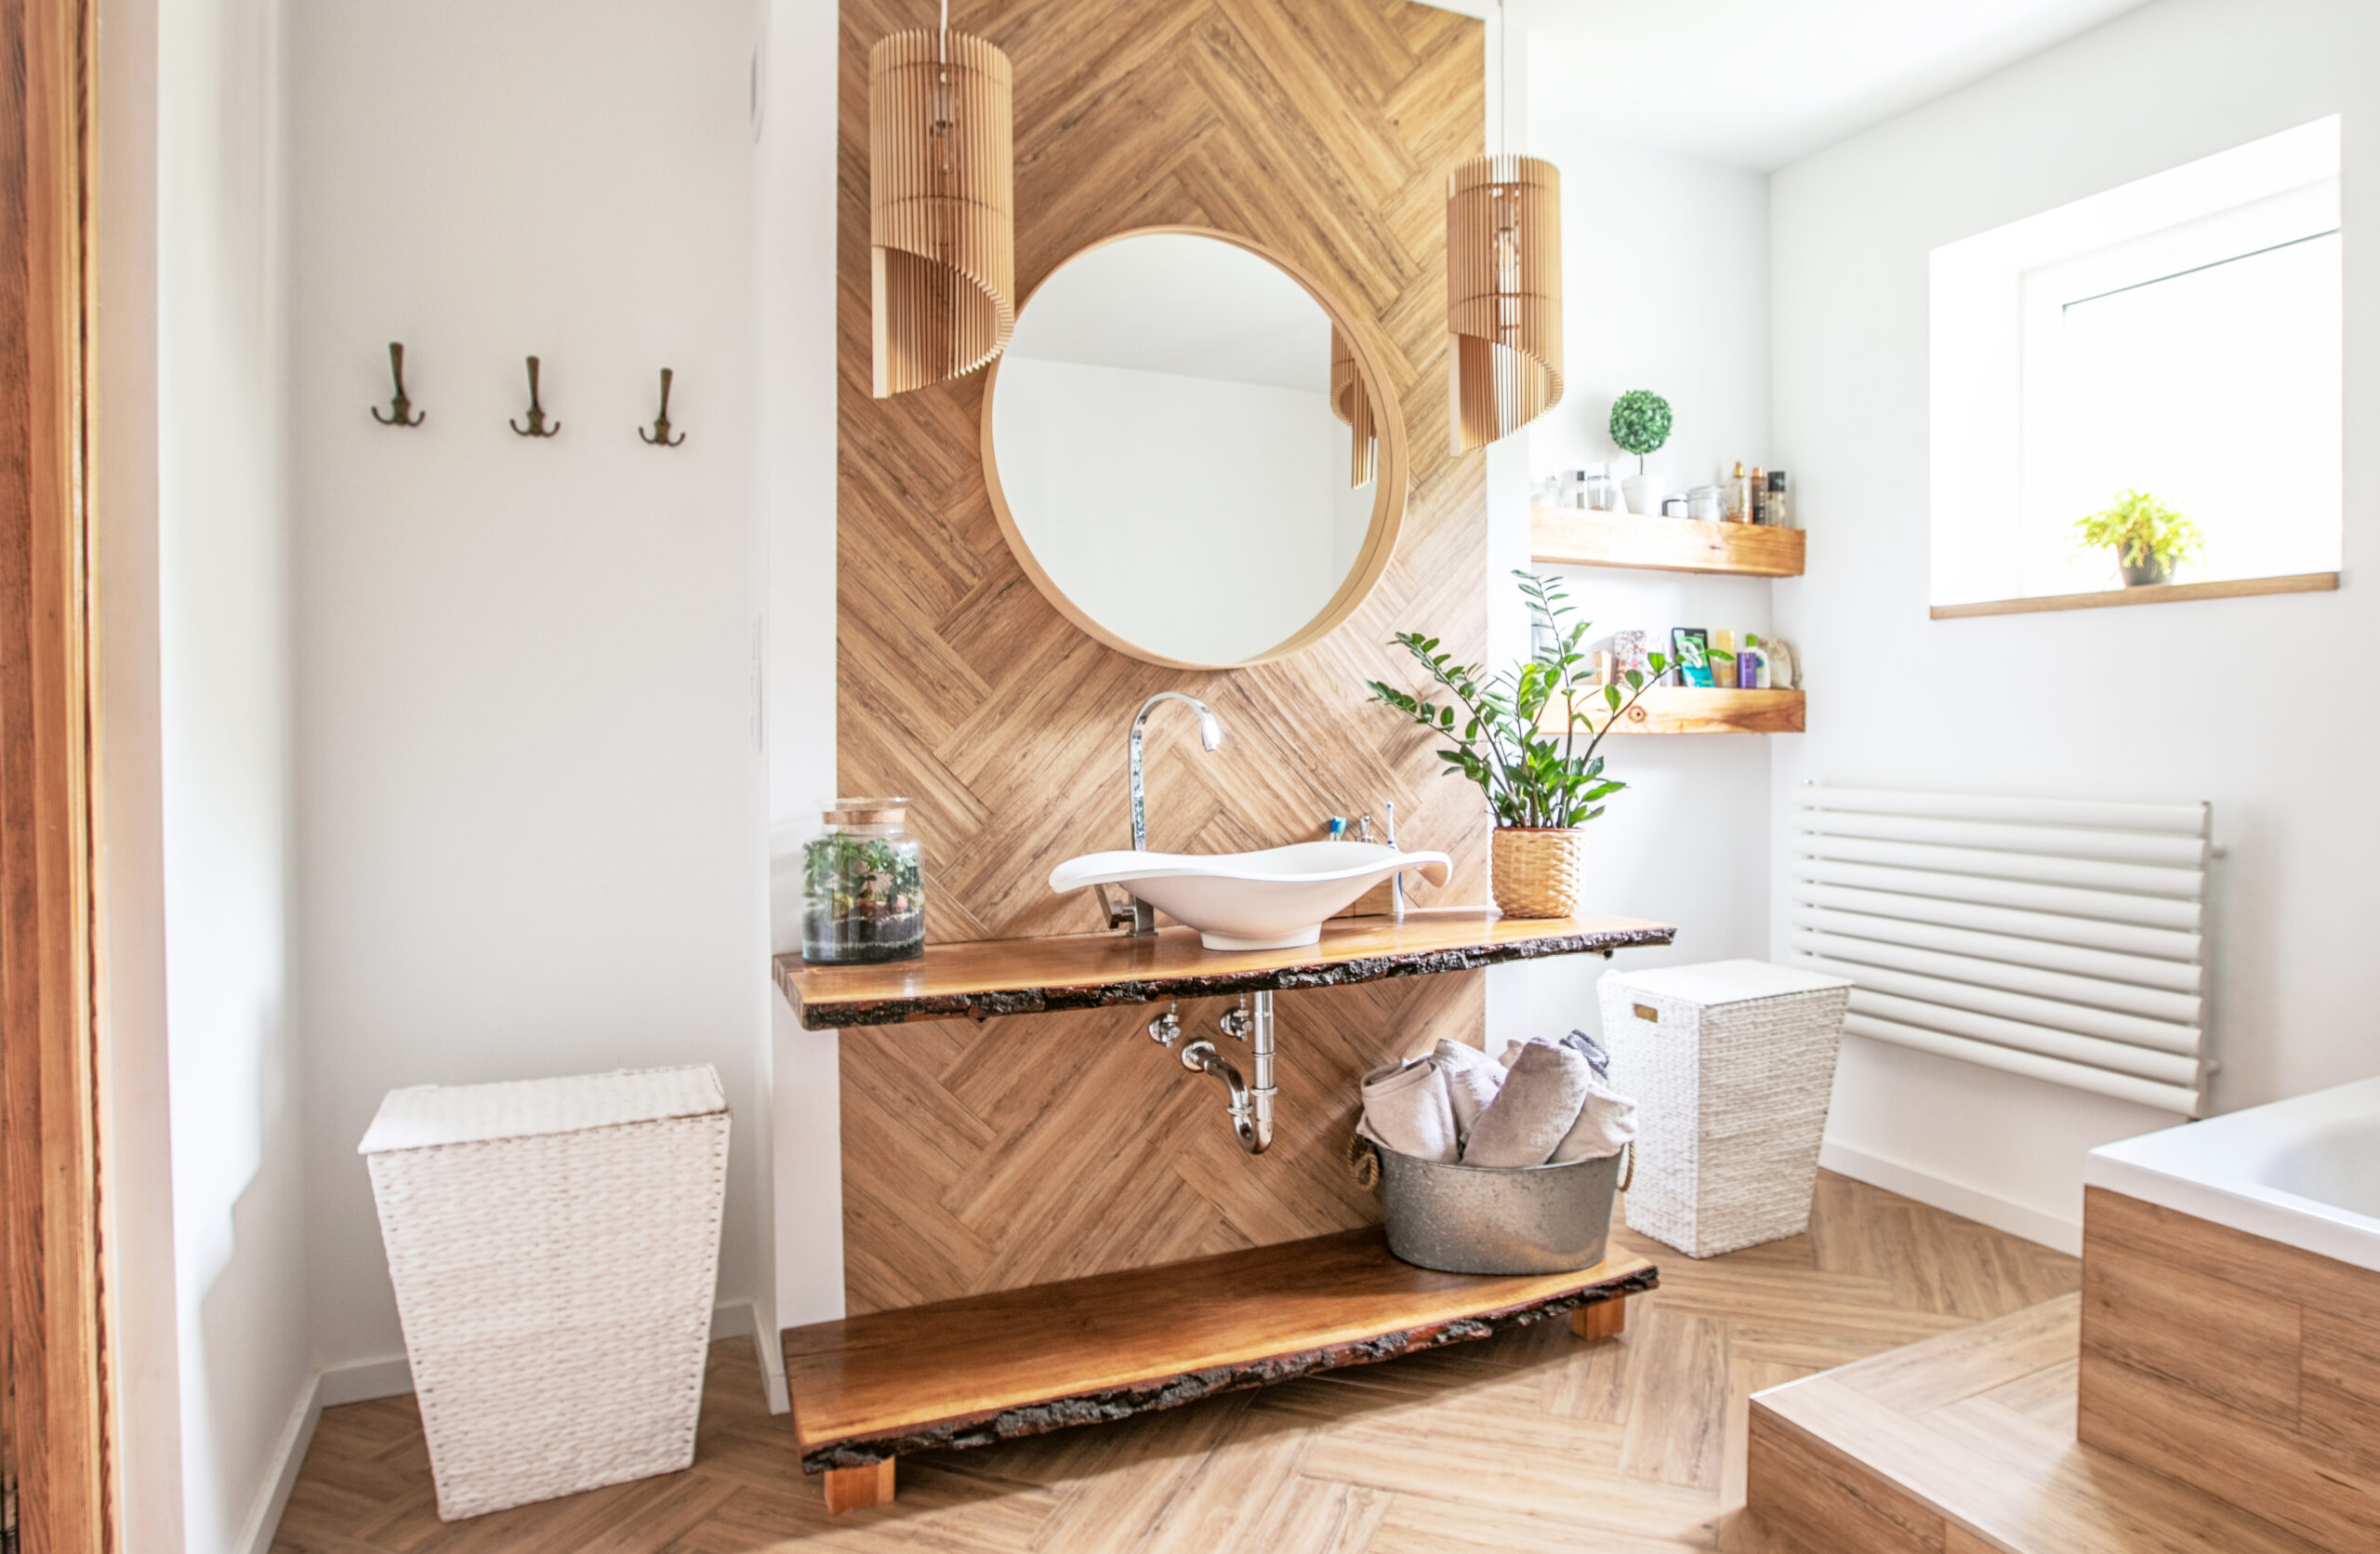 Luxury Bathroom With Round Mirror And Wood Backsplash